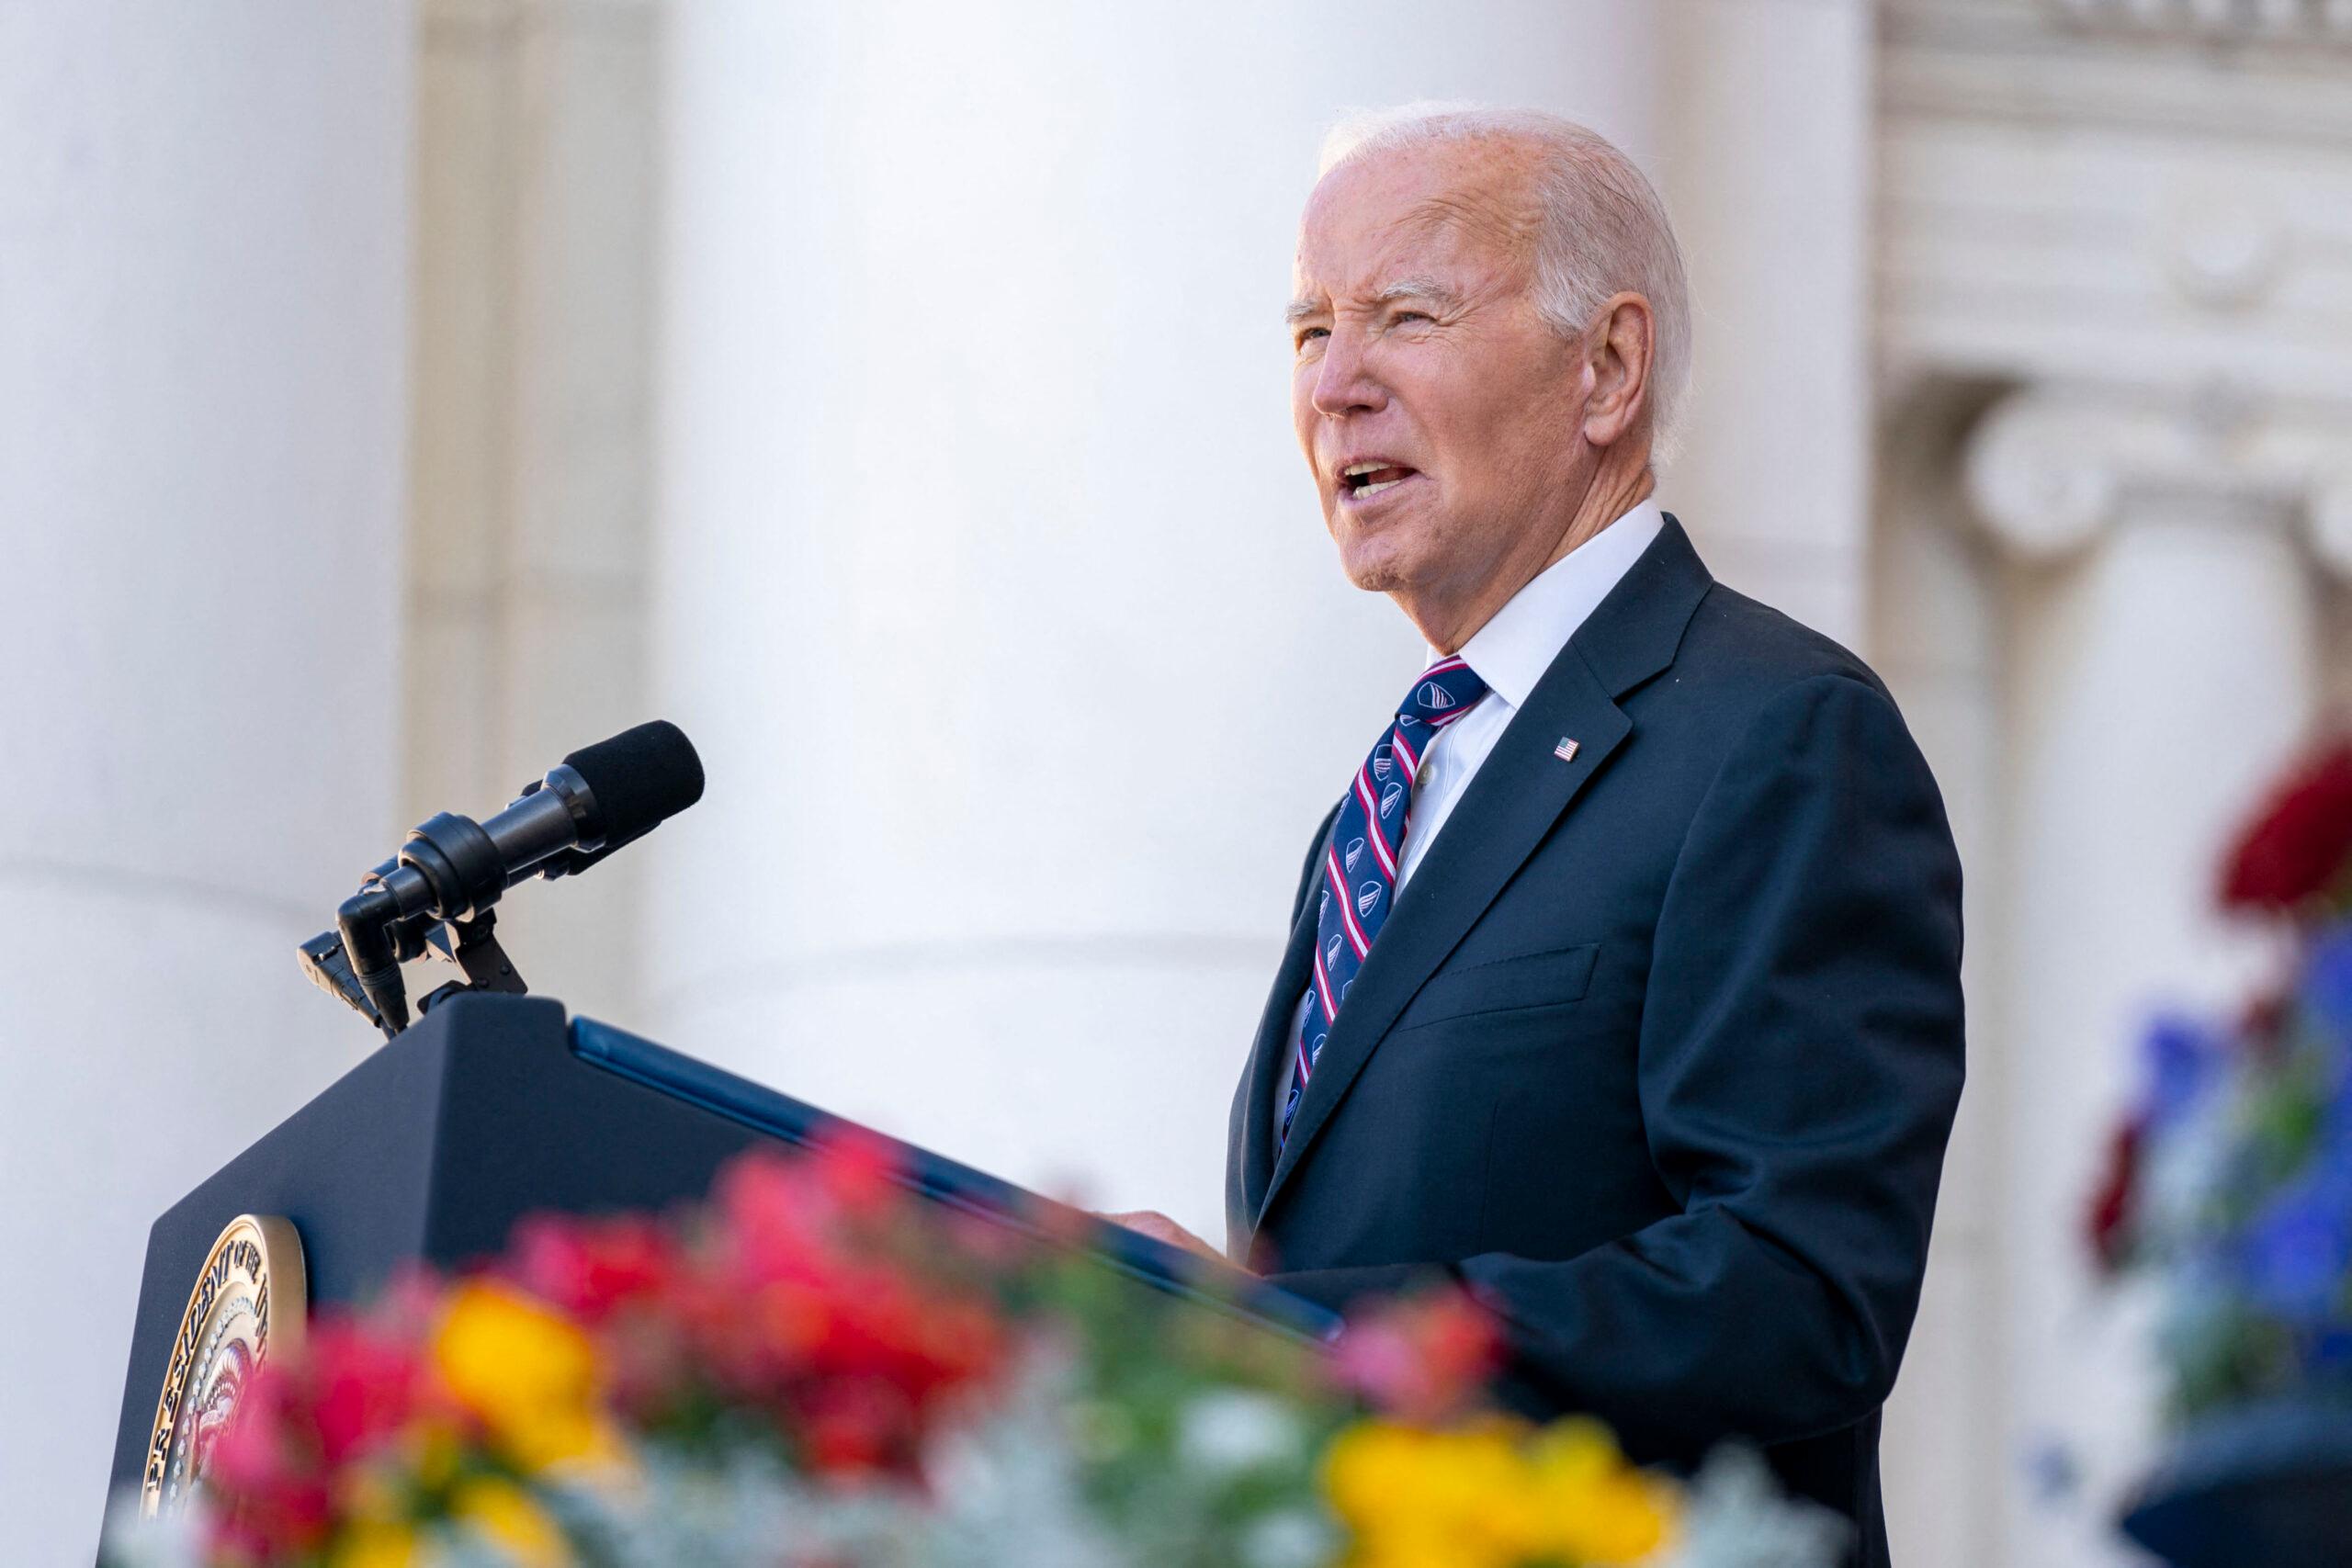 Joe Biden BLASTED For 'Disoriented' & 'Pathetic' Moment In Arlington